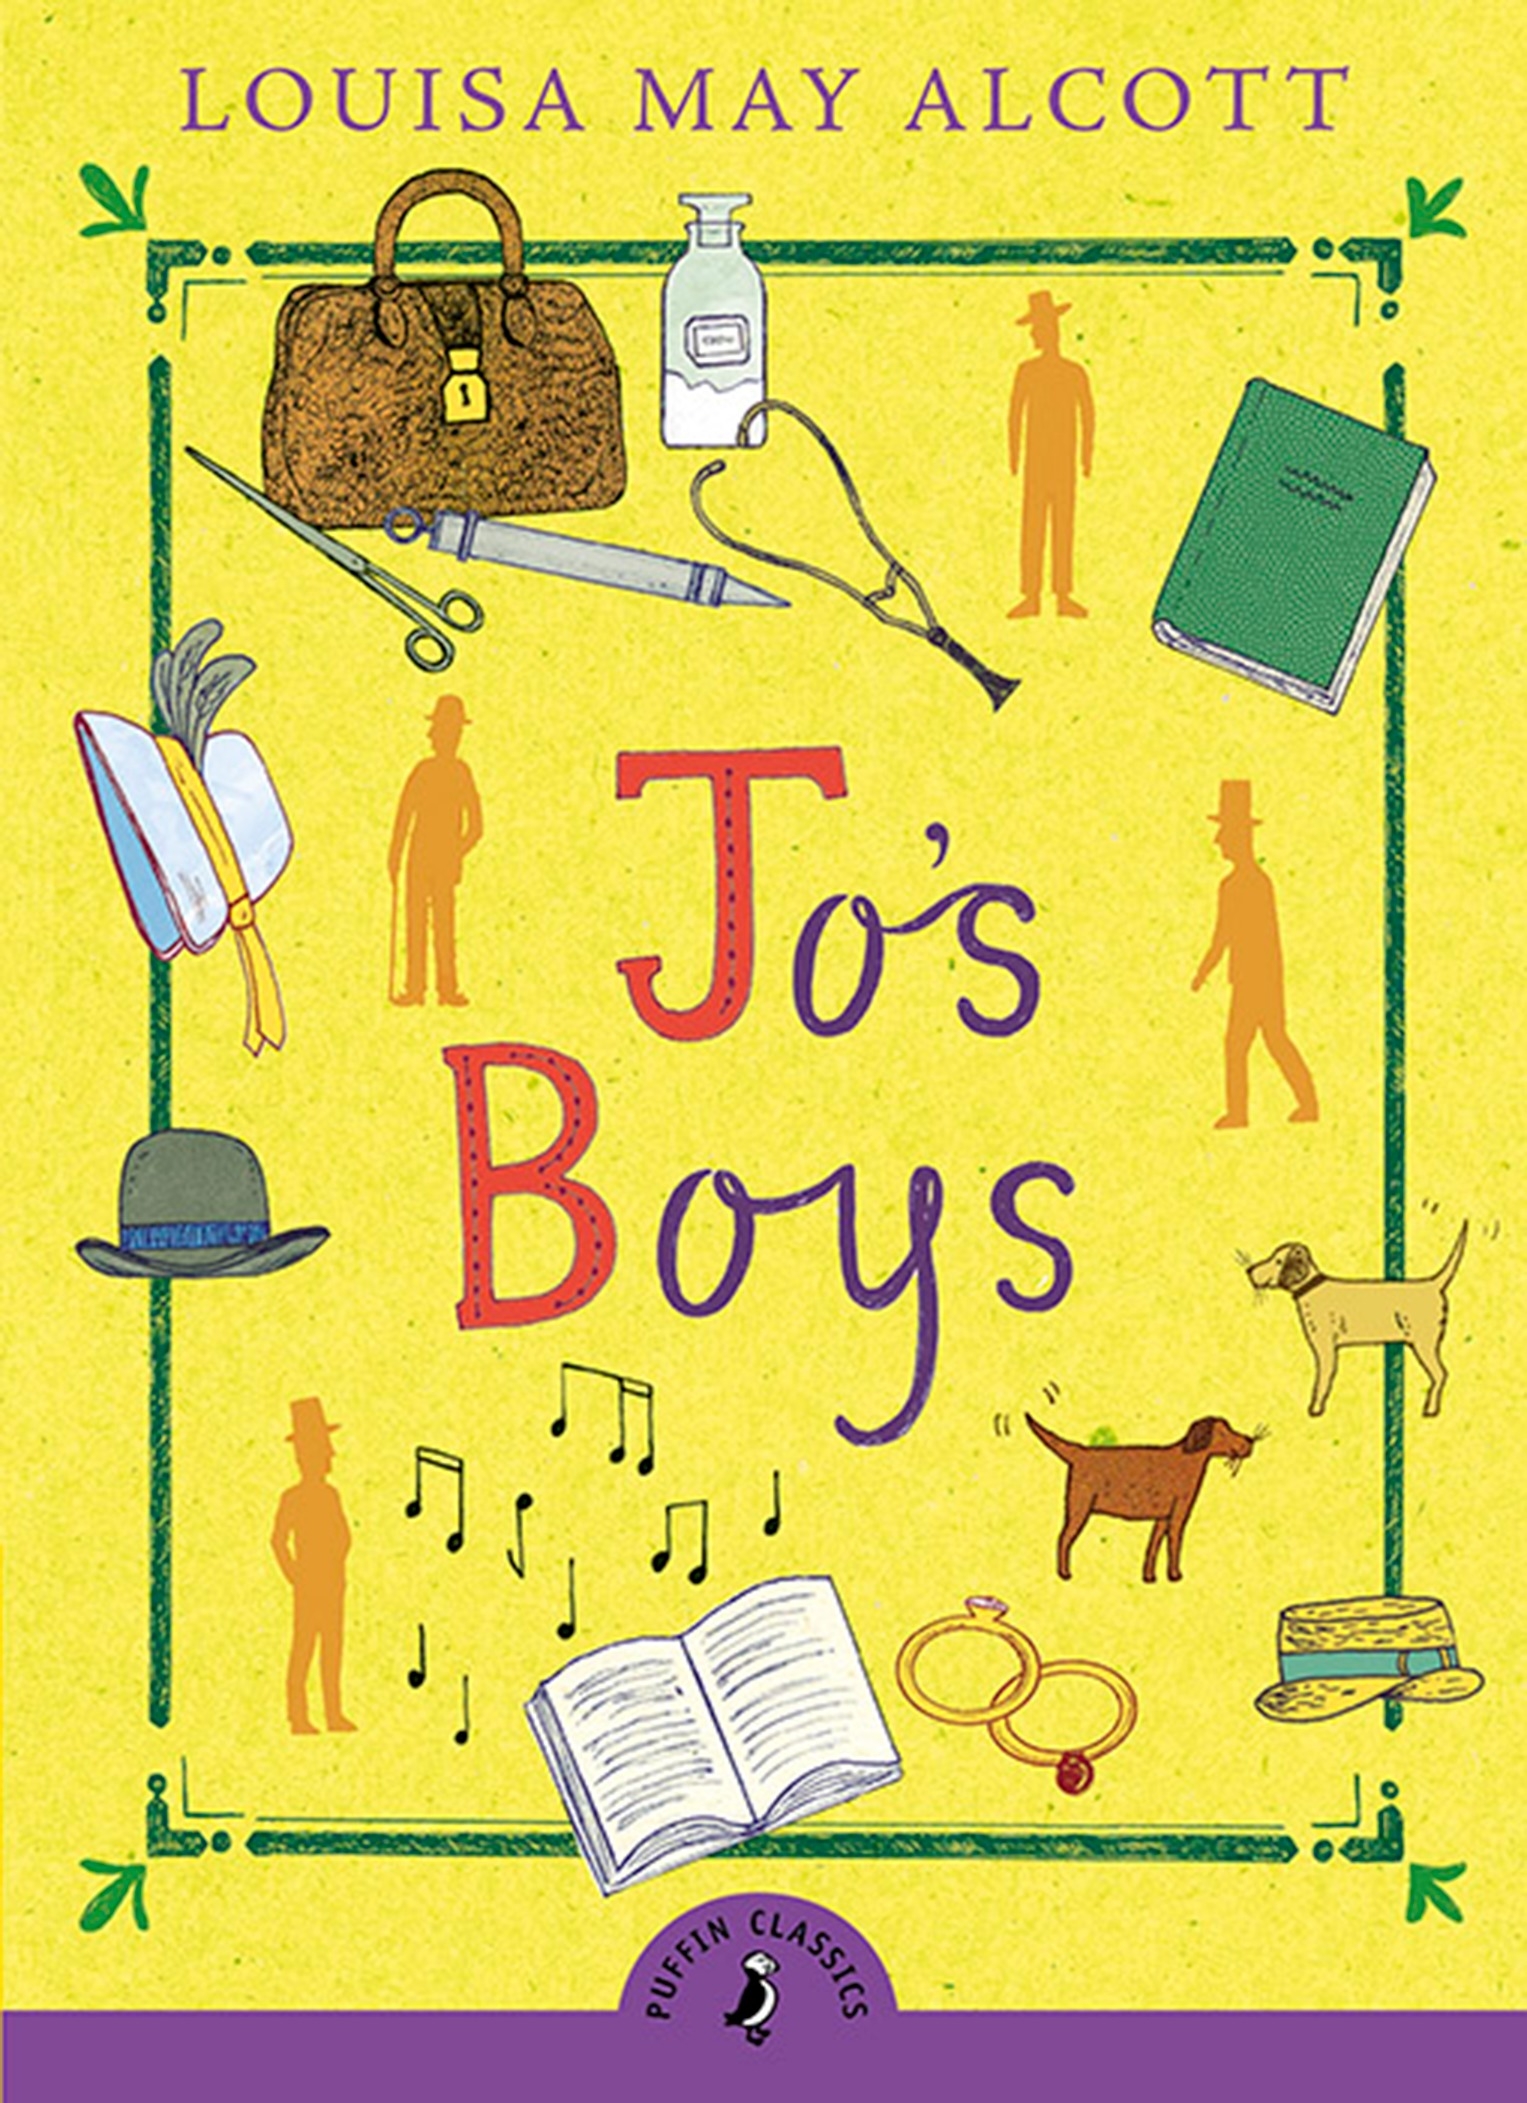 Boy s books. Jo's boys книга. Boy книга.